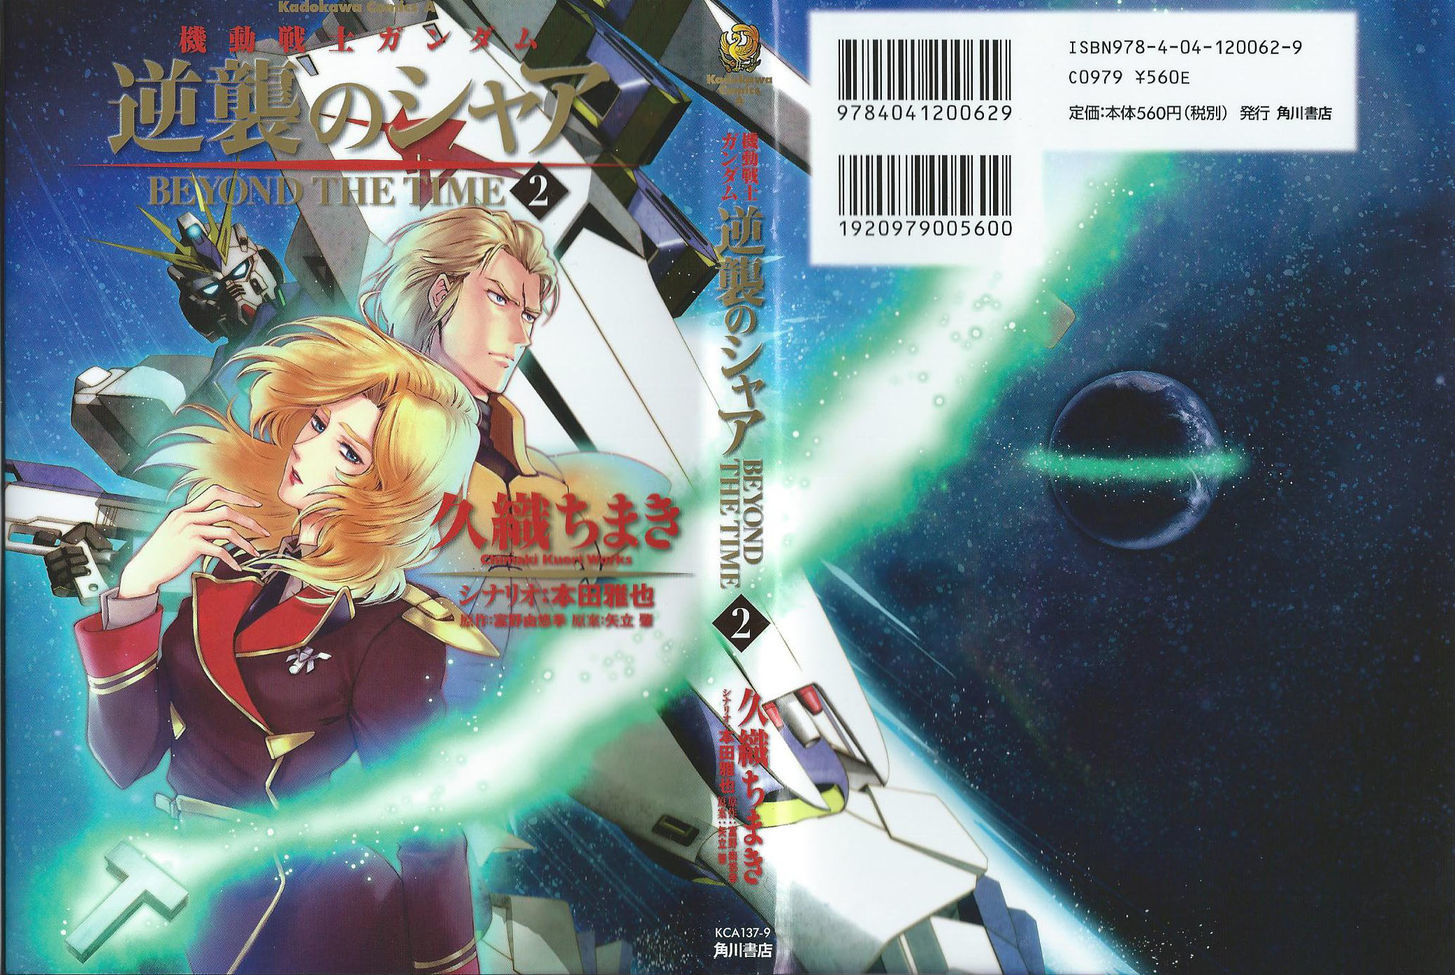 Kidou Senshi Gundam - Gyakushuu No Char - Beyond The Time Chapter 7 #1